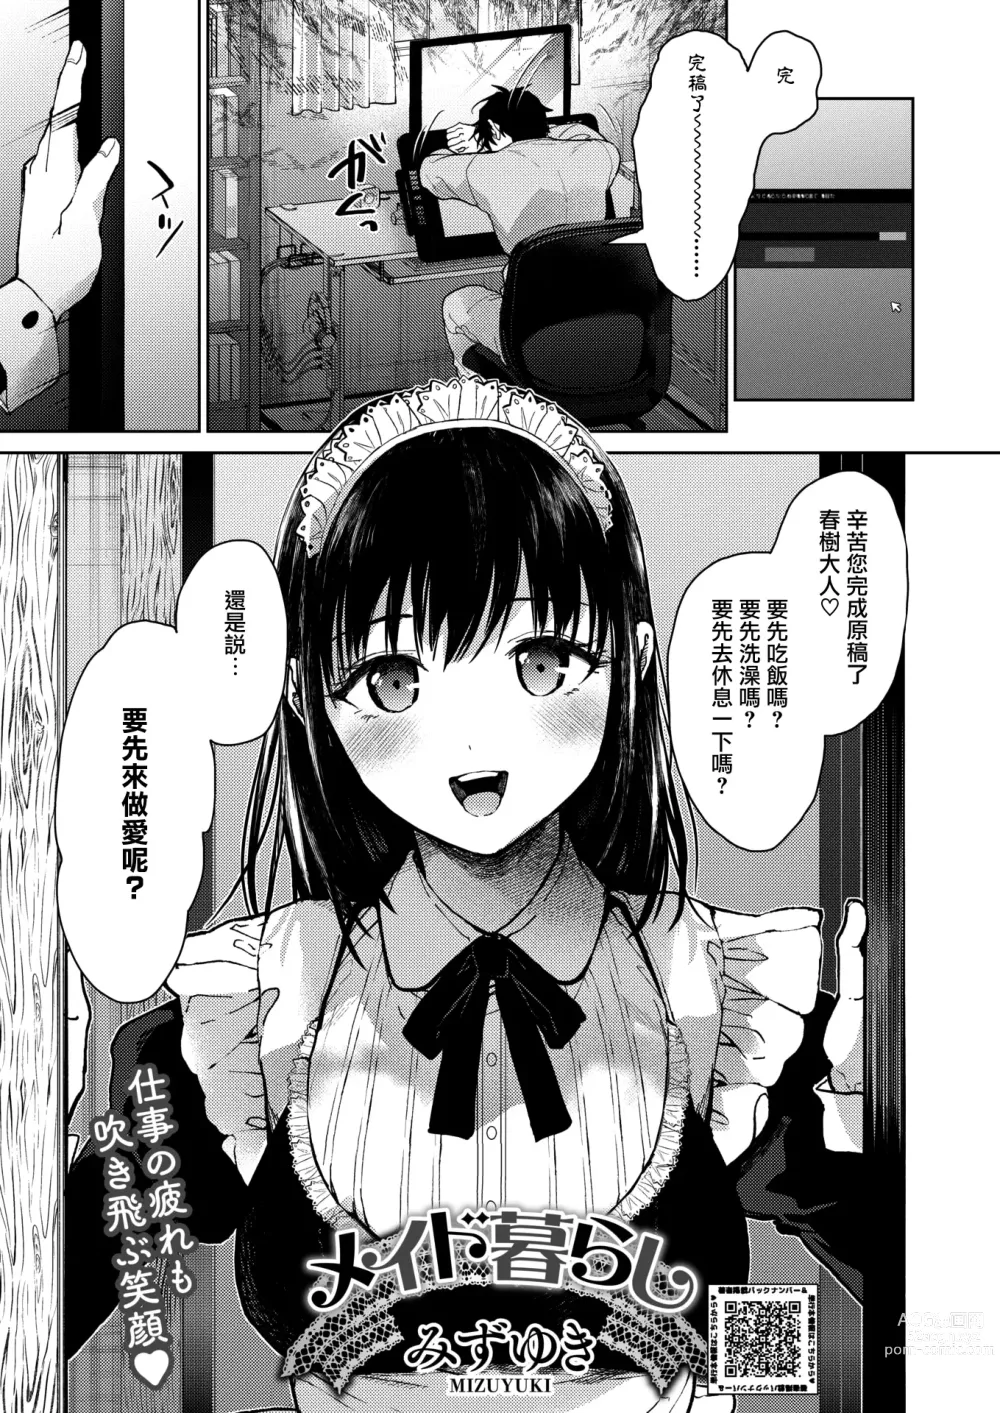 Page 2 of manga Maid Kurashi